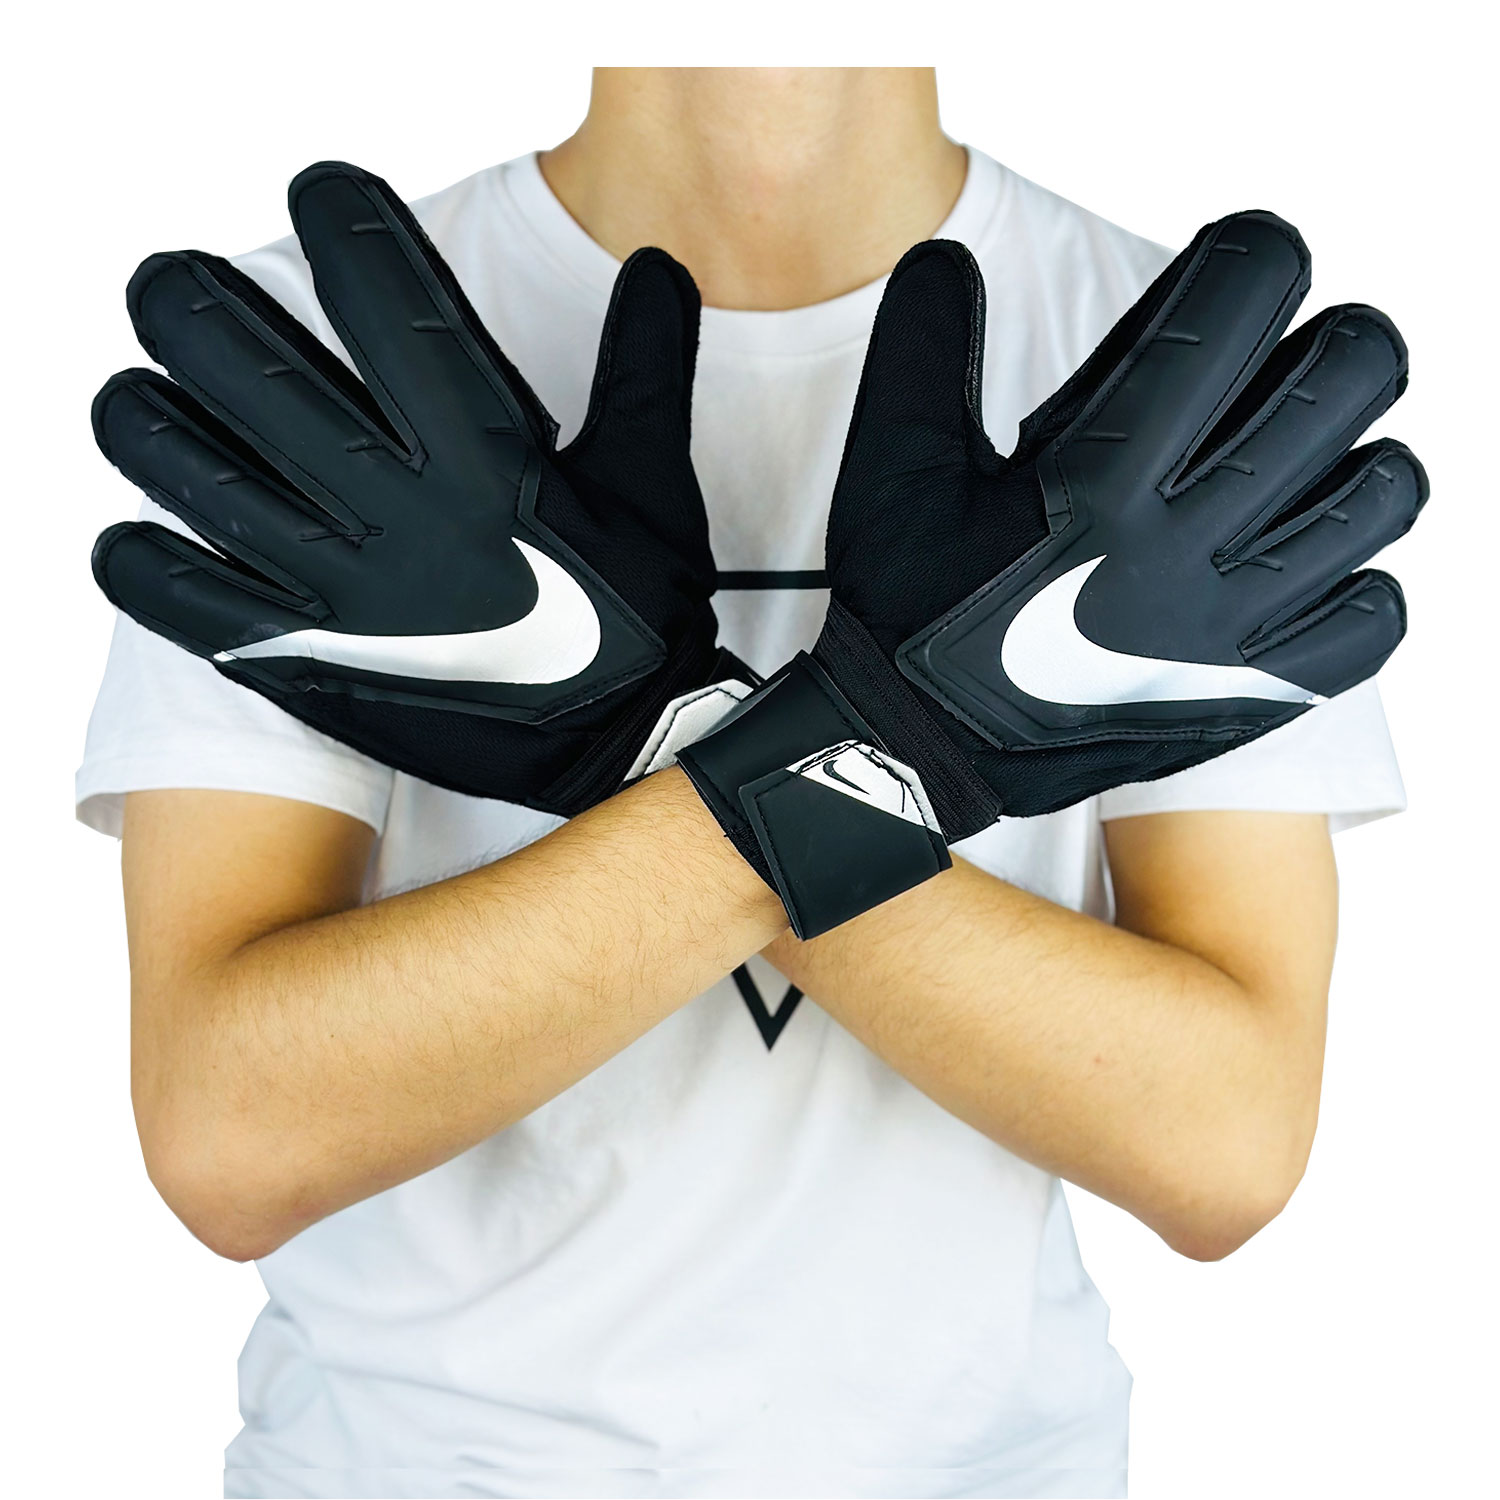 Вратарские перчатки Nike